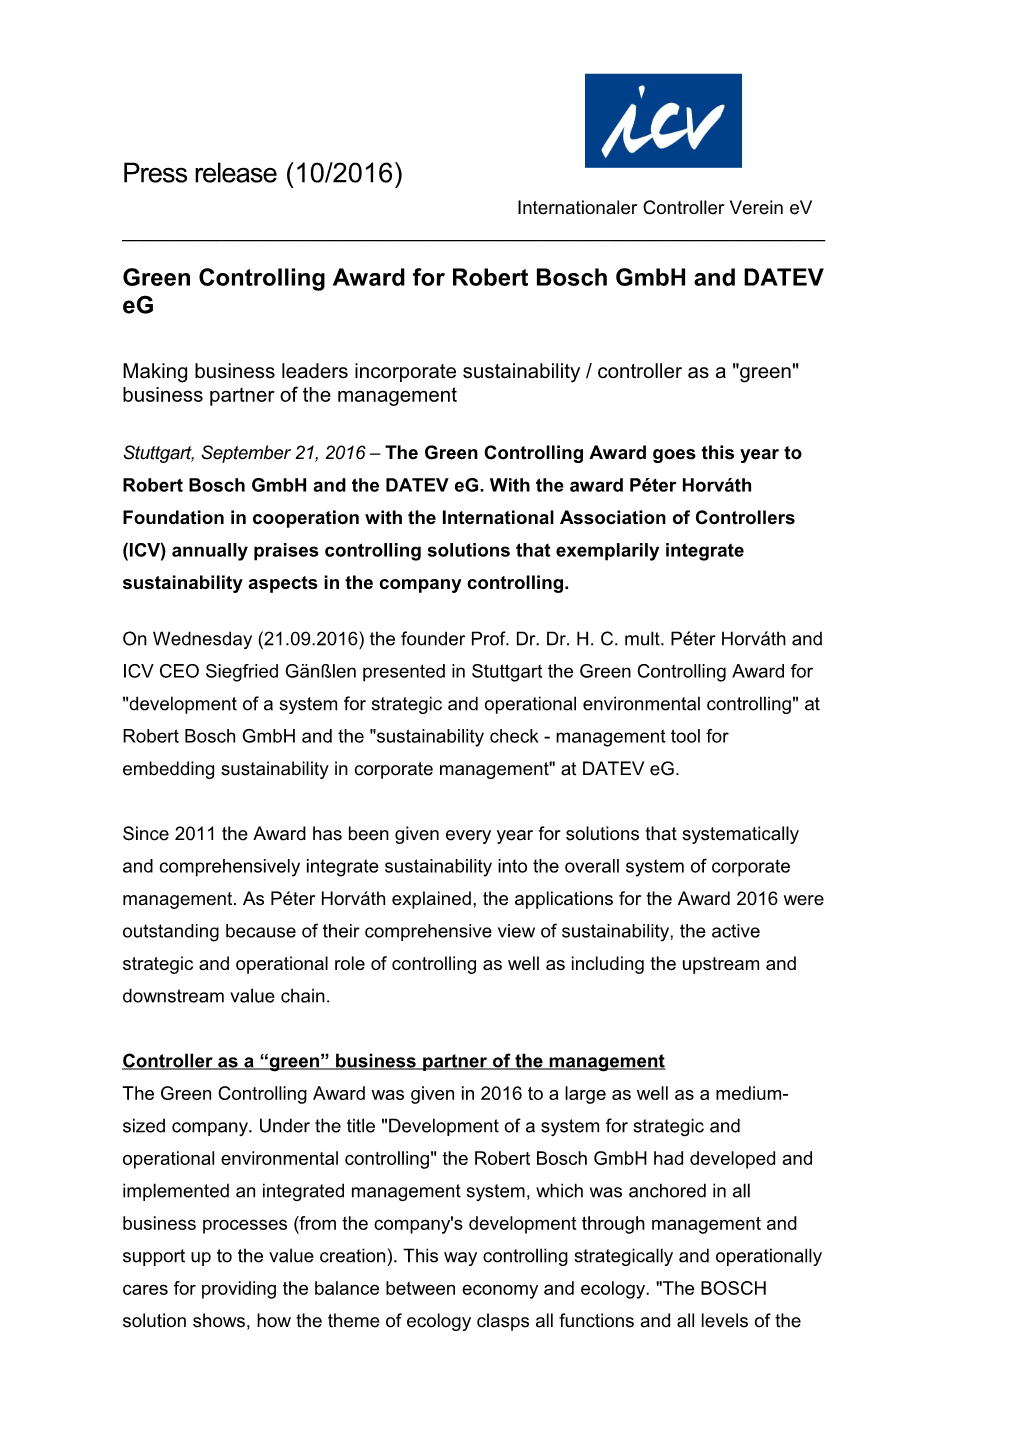 Green Controlling Award for Robert Bosch Gmbh and DATEV Eg